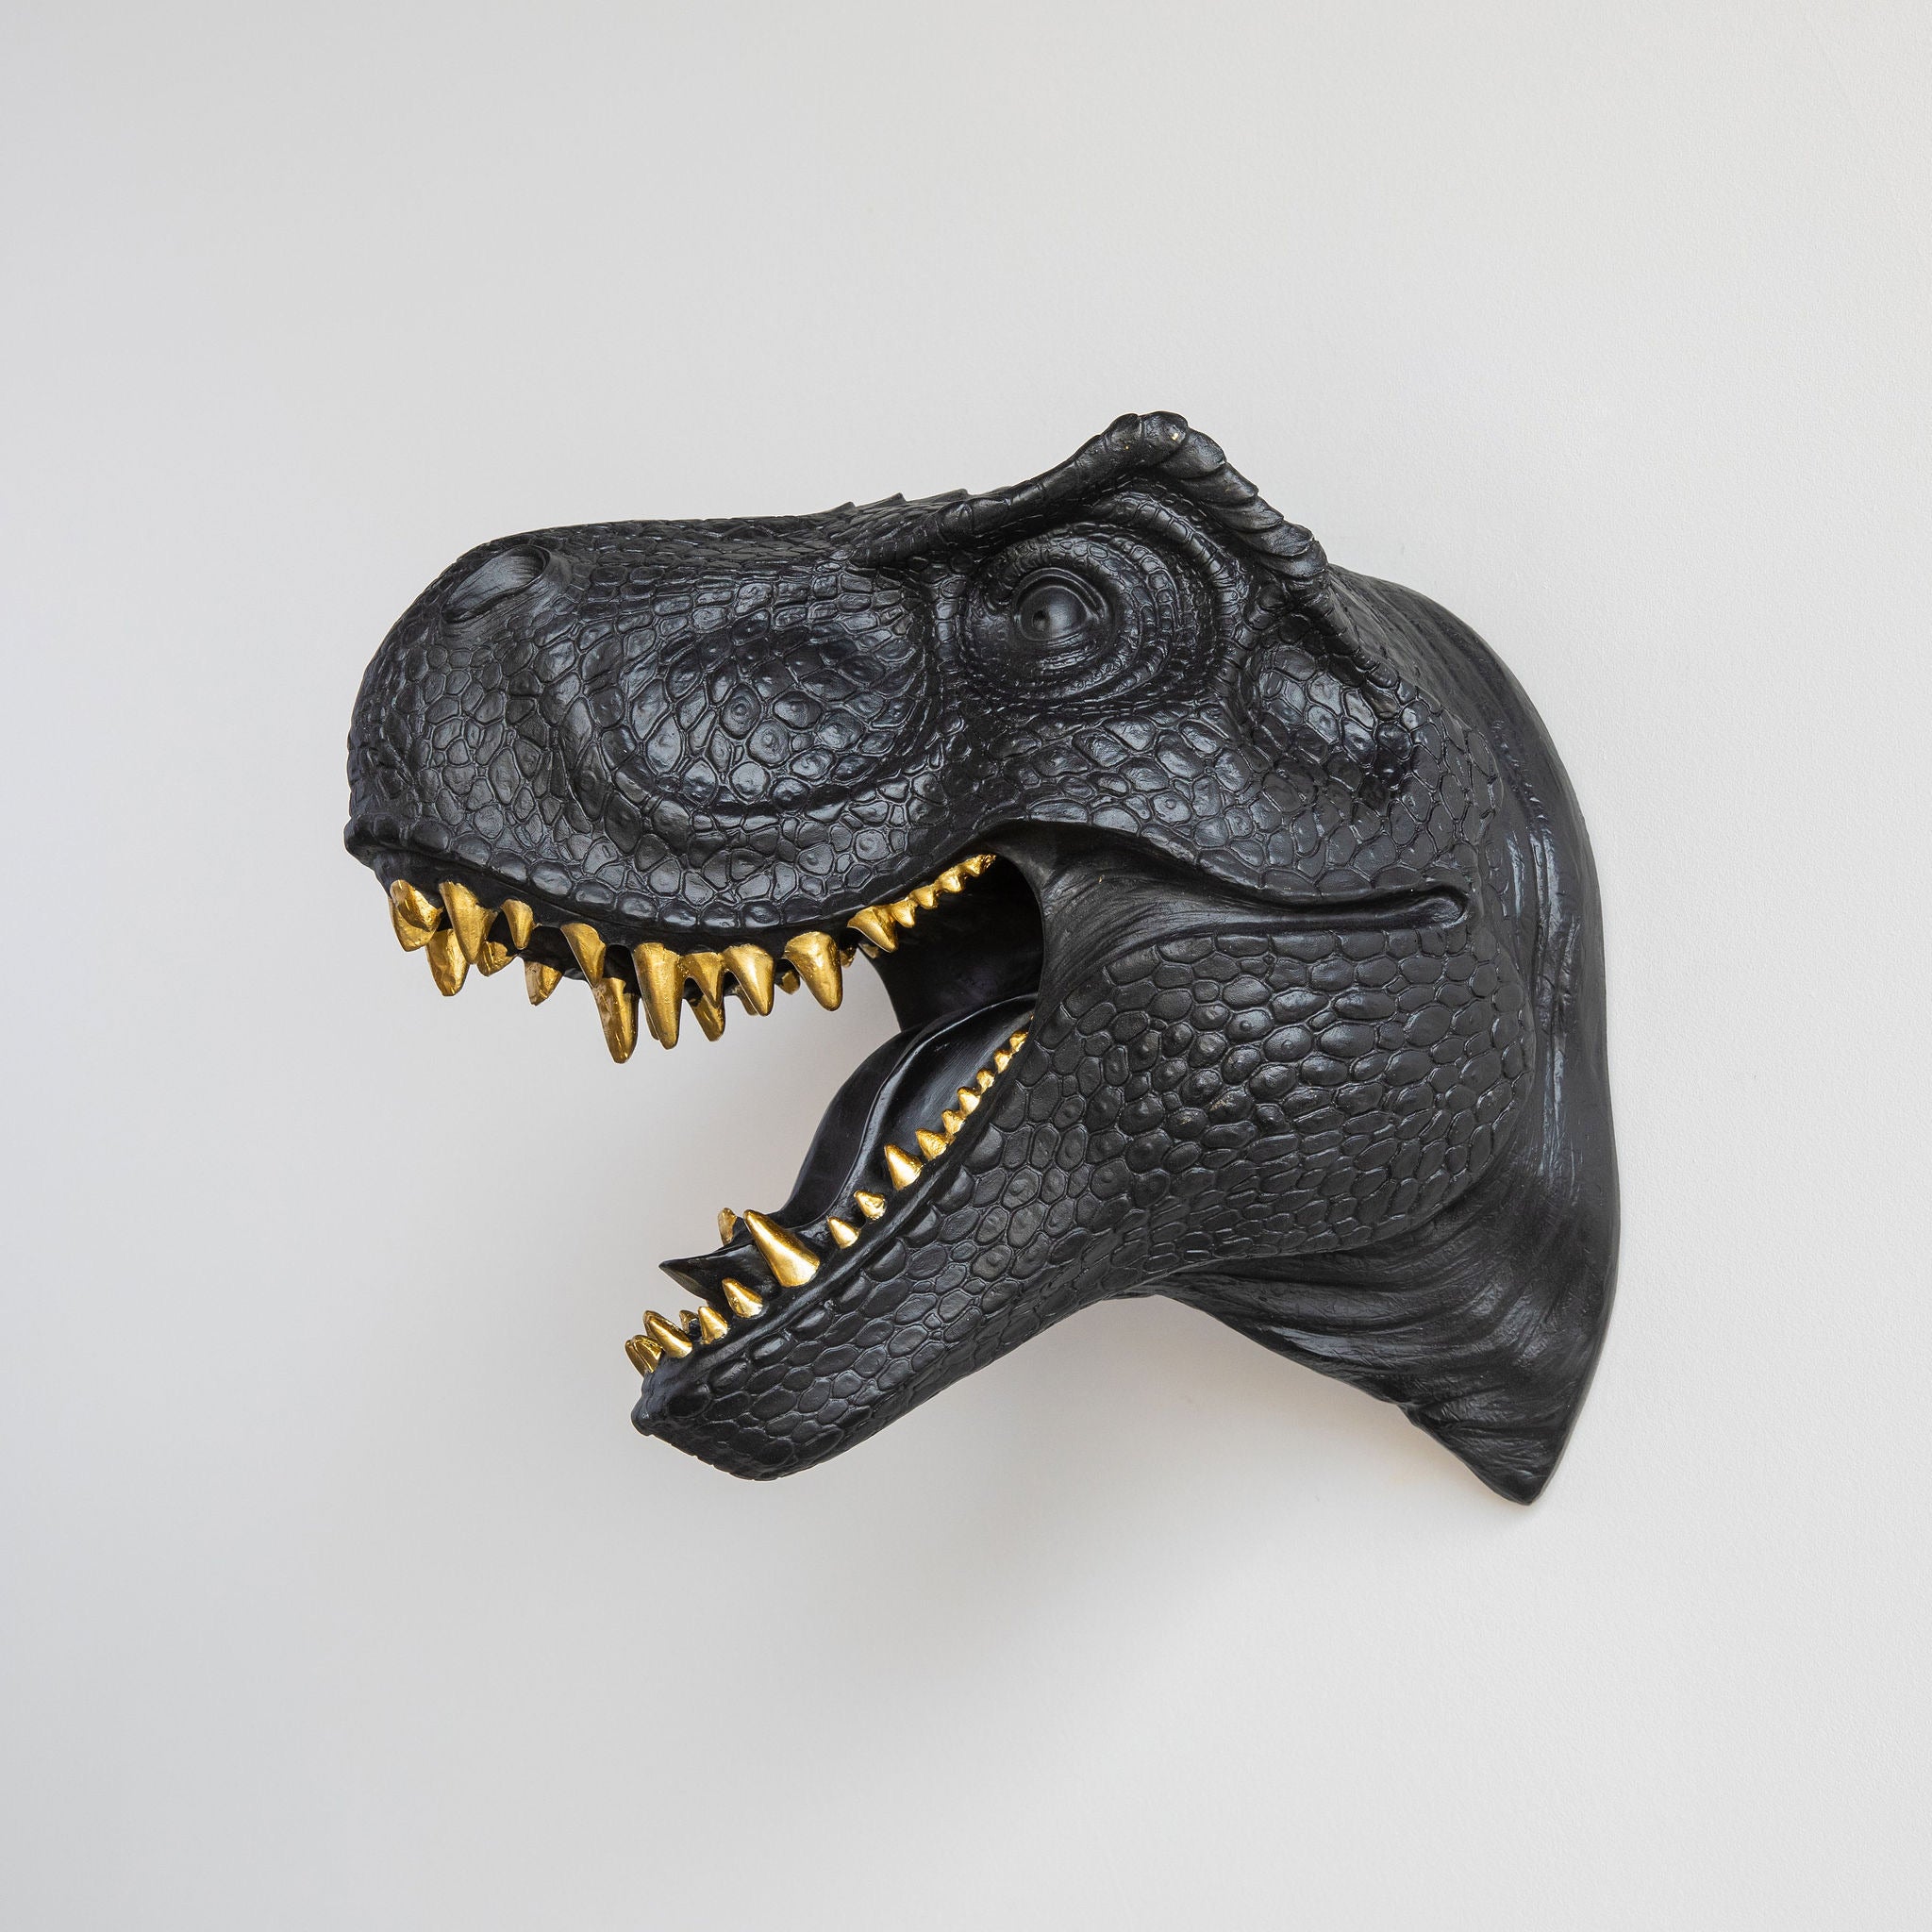 T-Rex Dinosaur Head Wall Mount // Black with Gold Teeth